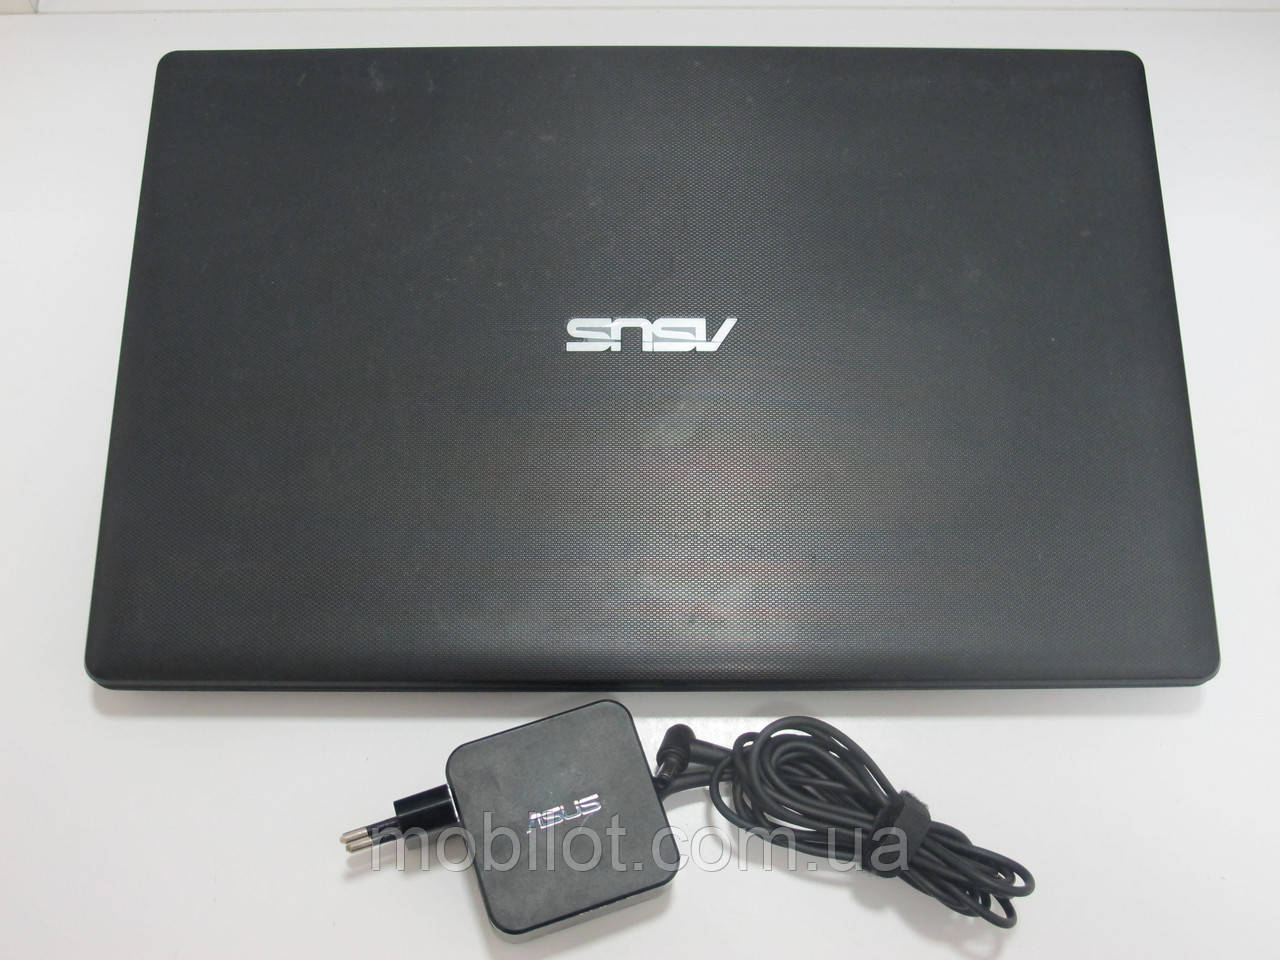 Ноутбук Asus X551CA (X551CA-SX013D) (NR-5874)